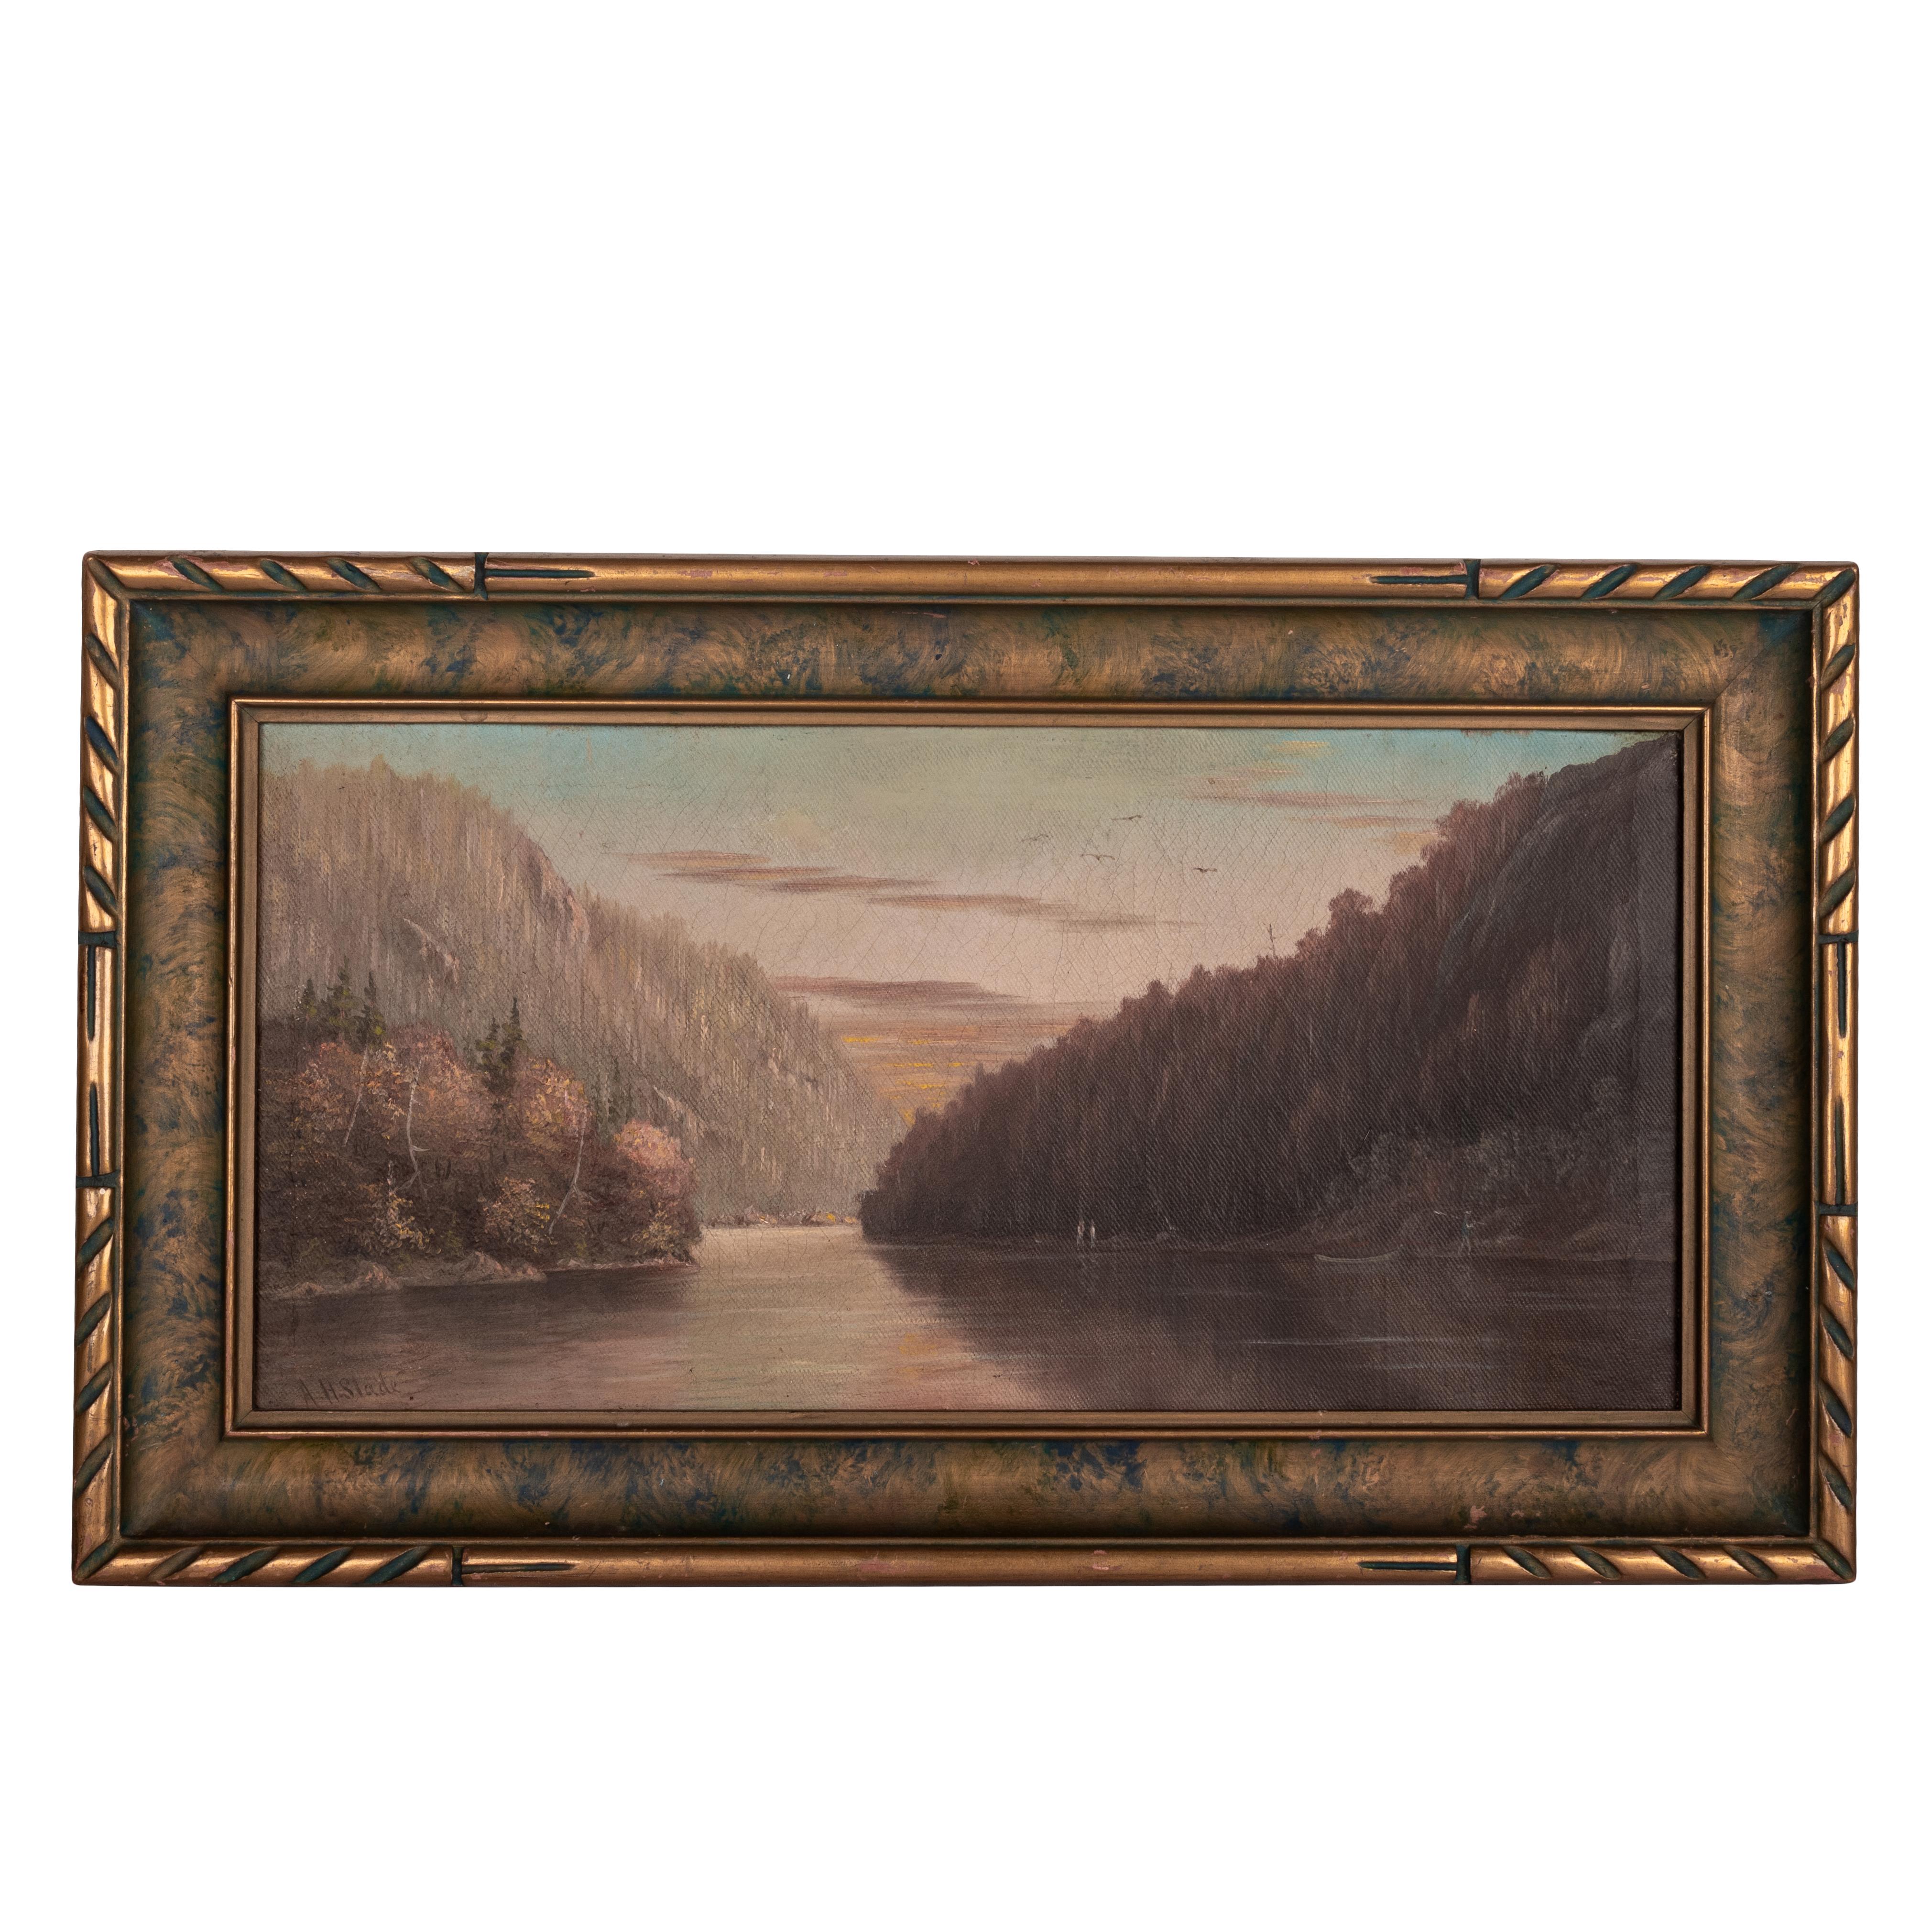  Albert Horatio Slade Landscape Painting - Antique American 19th C Realist California River Landscape Oil on Canvas 1888